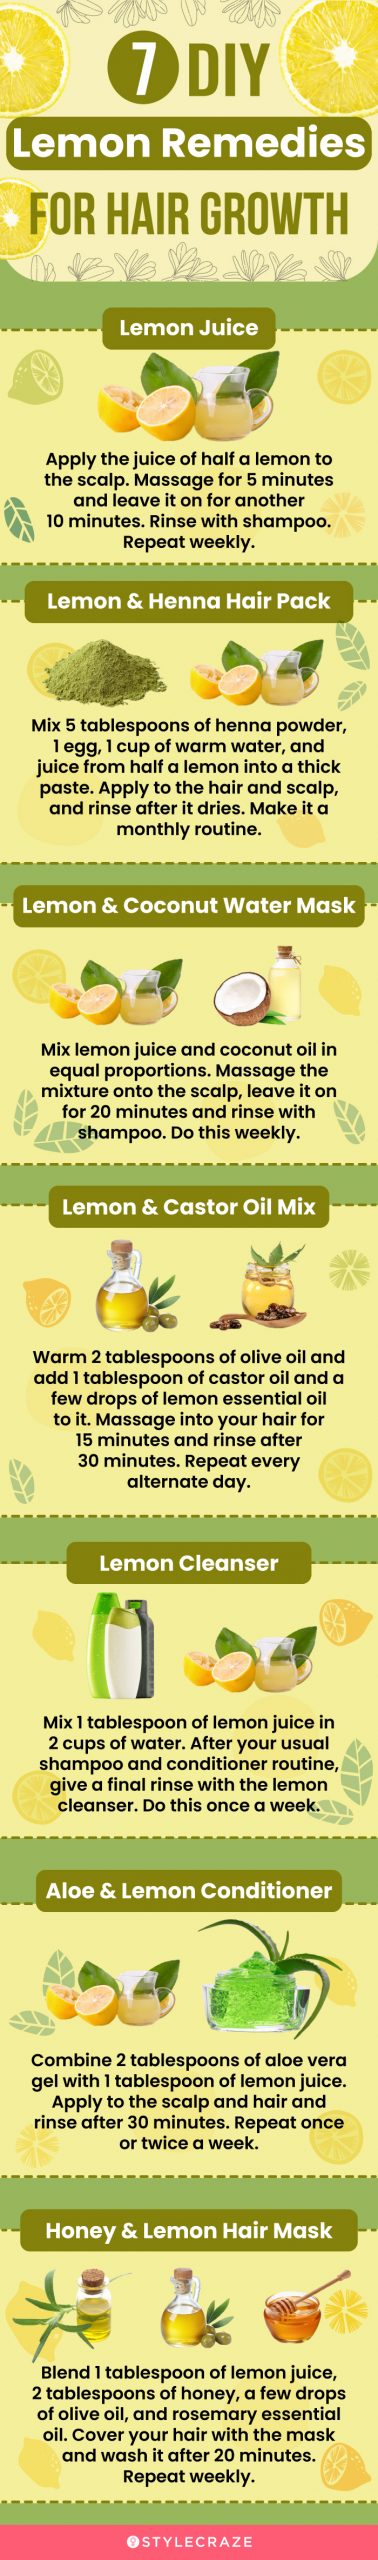 7 diy lemon remedies for hair growth (infographic)